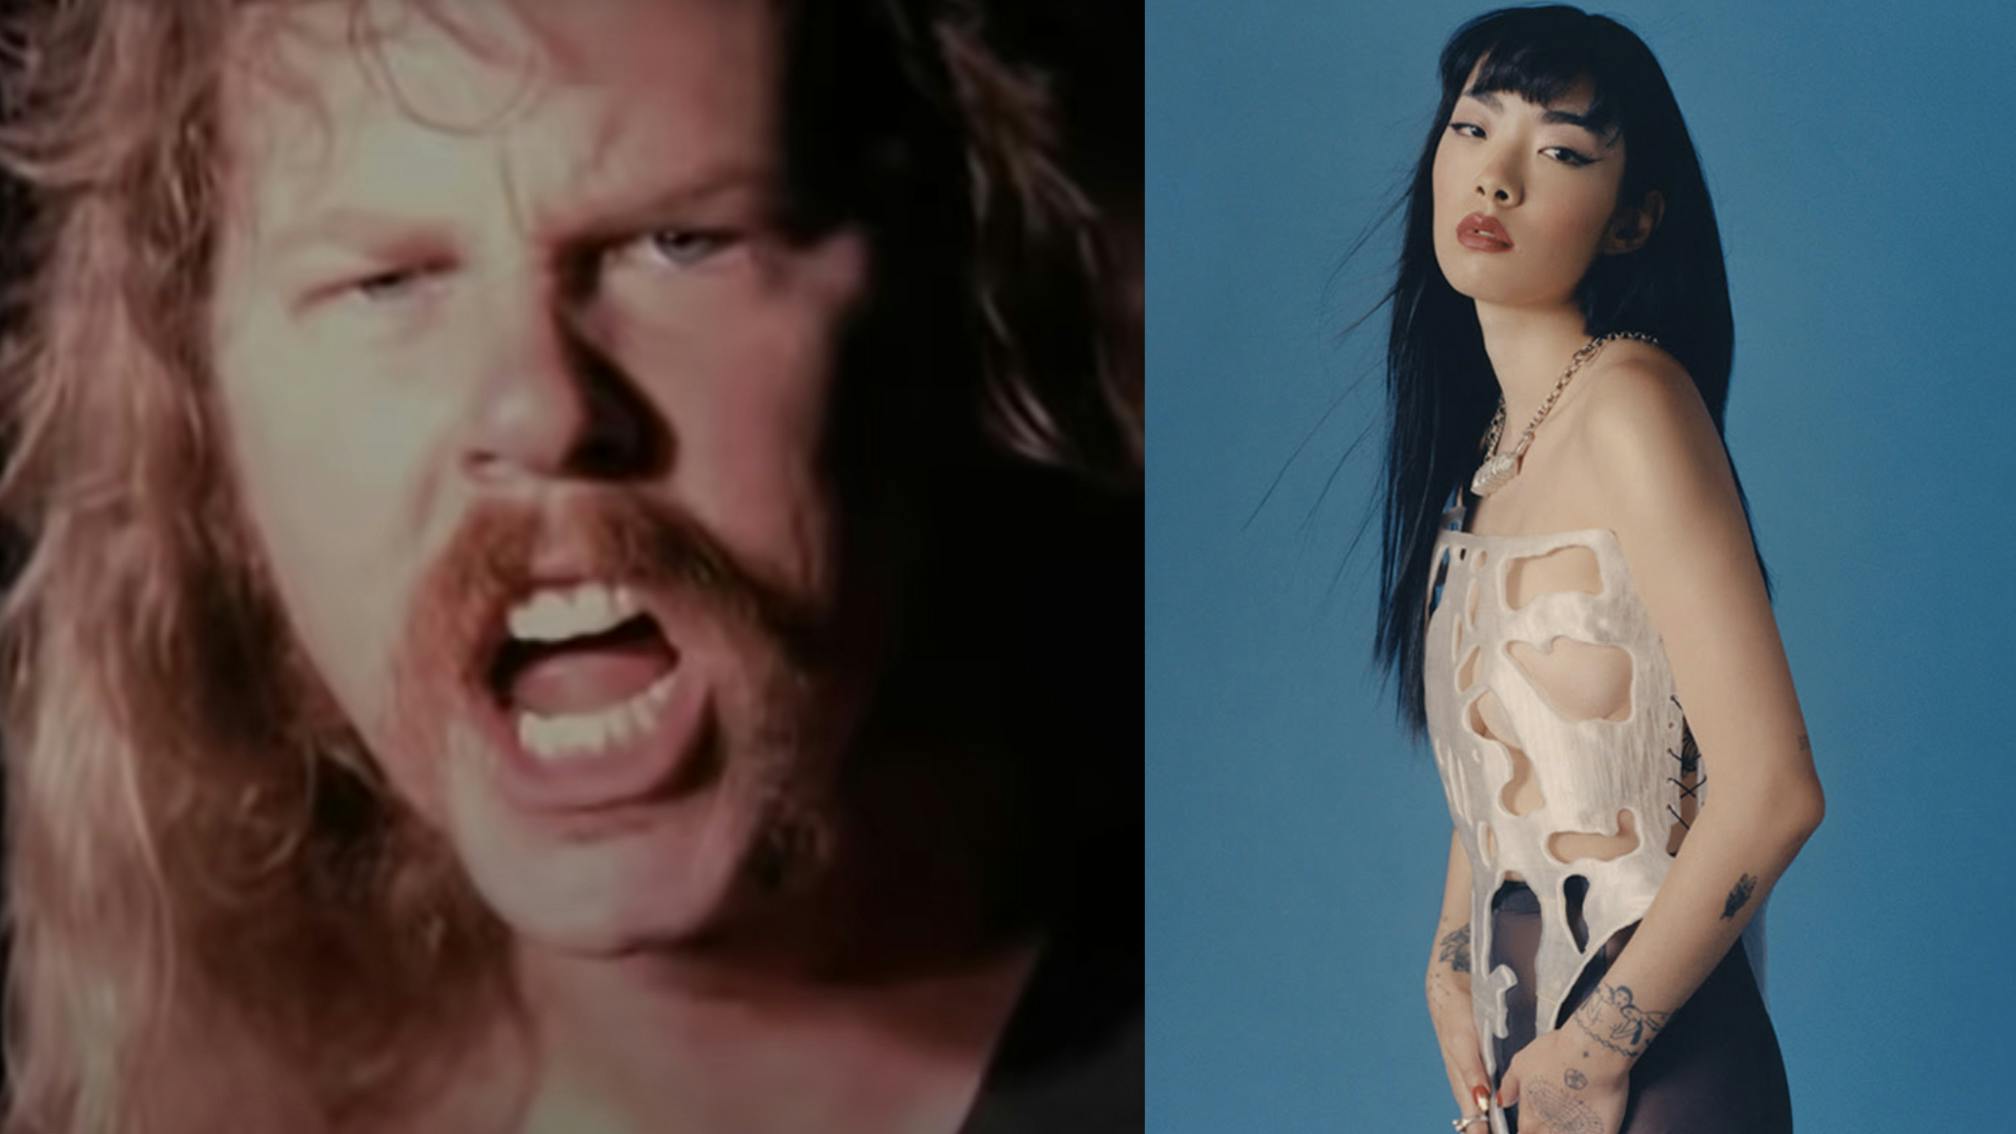 Rina Sawayama shares gloriously wild cover of Metallica's Enter Sandman